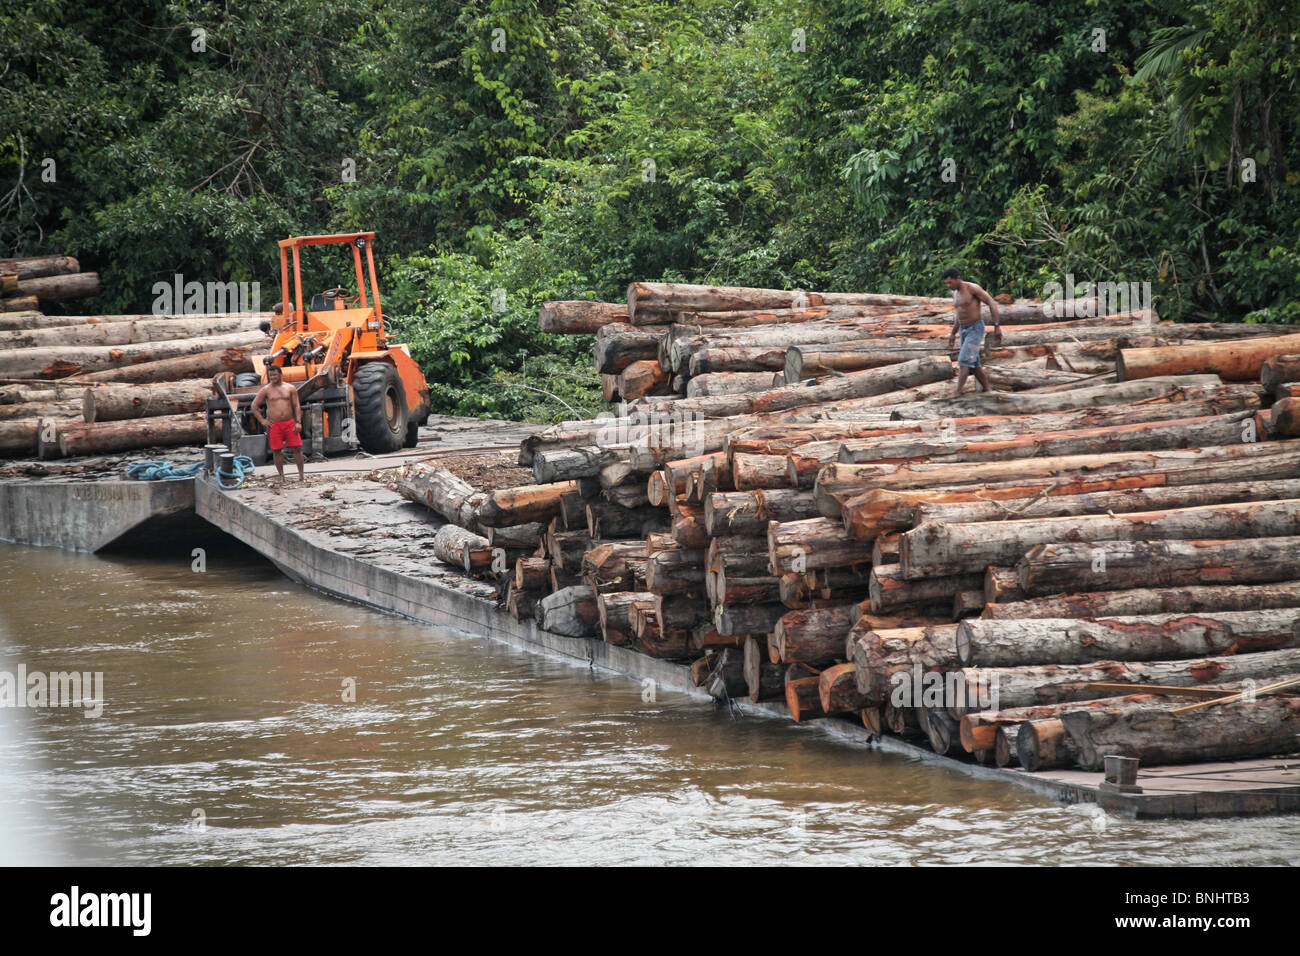 Breves Kanäle Brasilien Amazonas Regenwald Amazonas Dschungel Wald Fluss  Tropen tropischen Holz Holz Holzverarbeitung Stockfotografie - Alamy